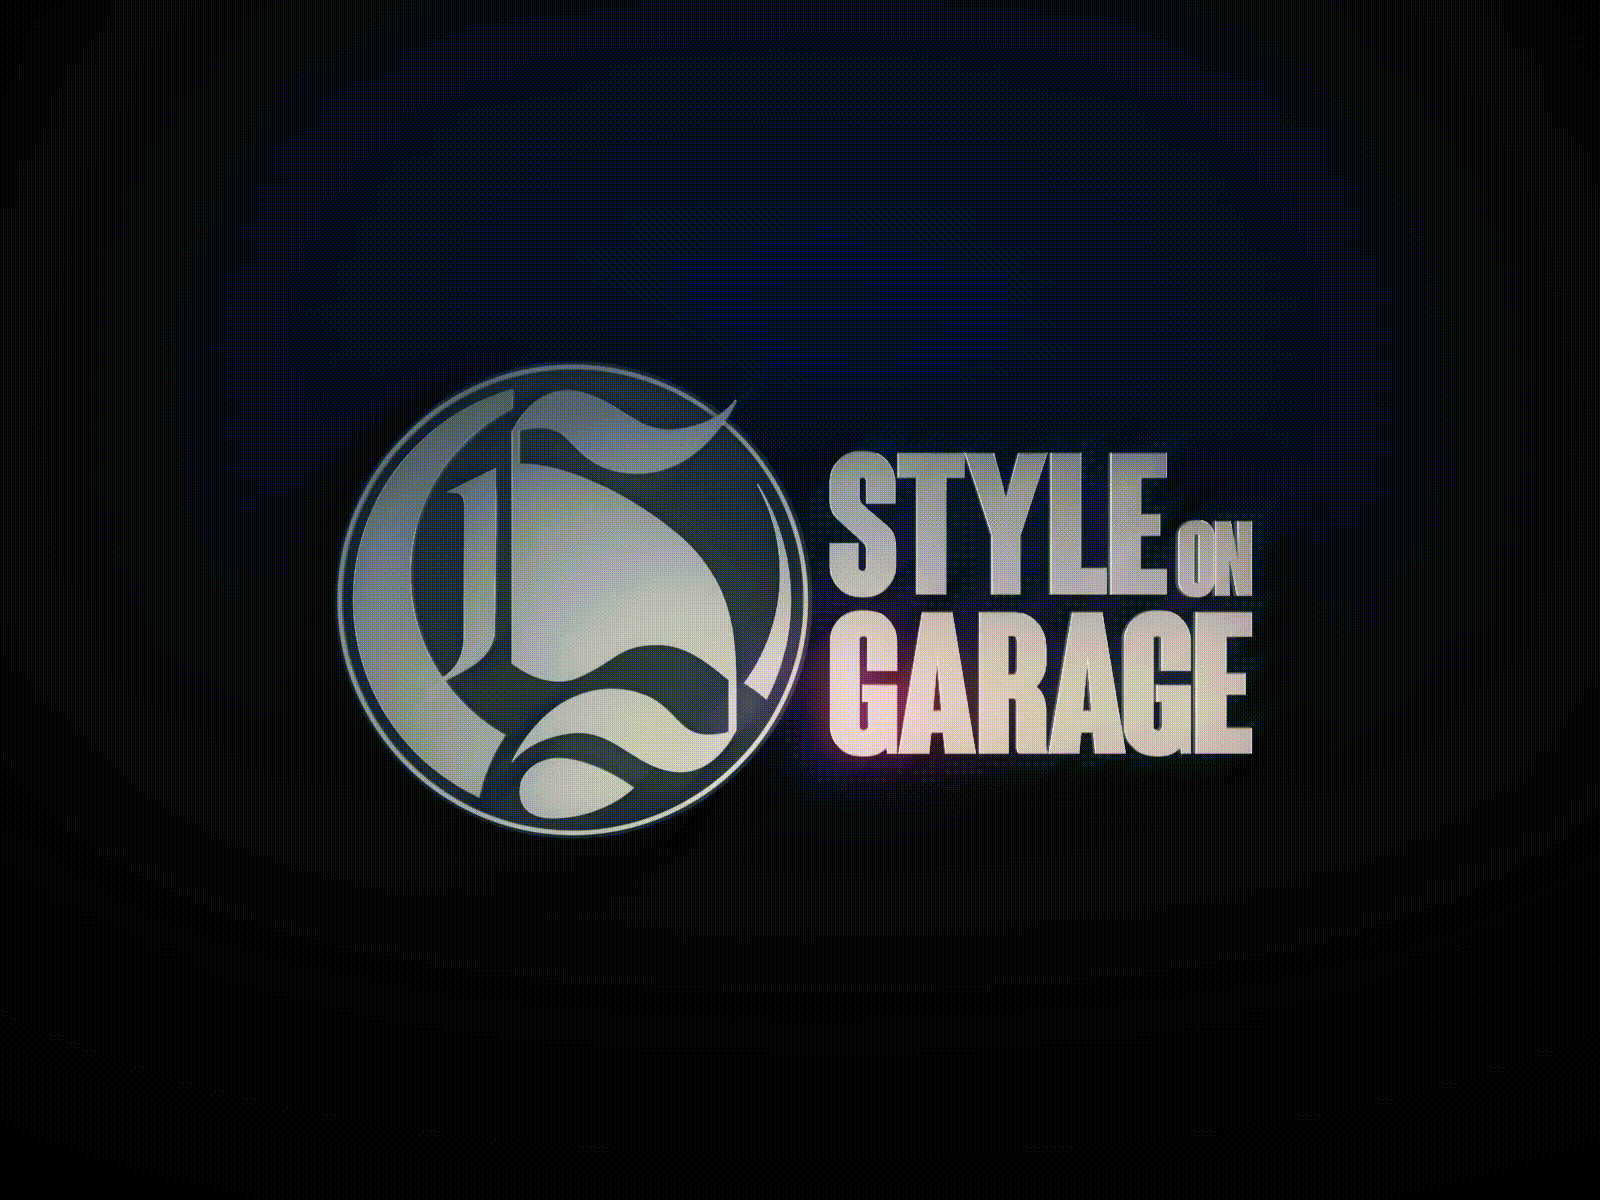 Style on Garage - logo reveal